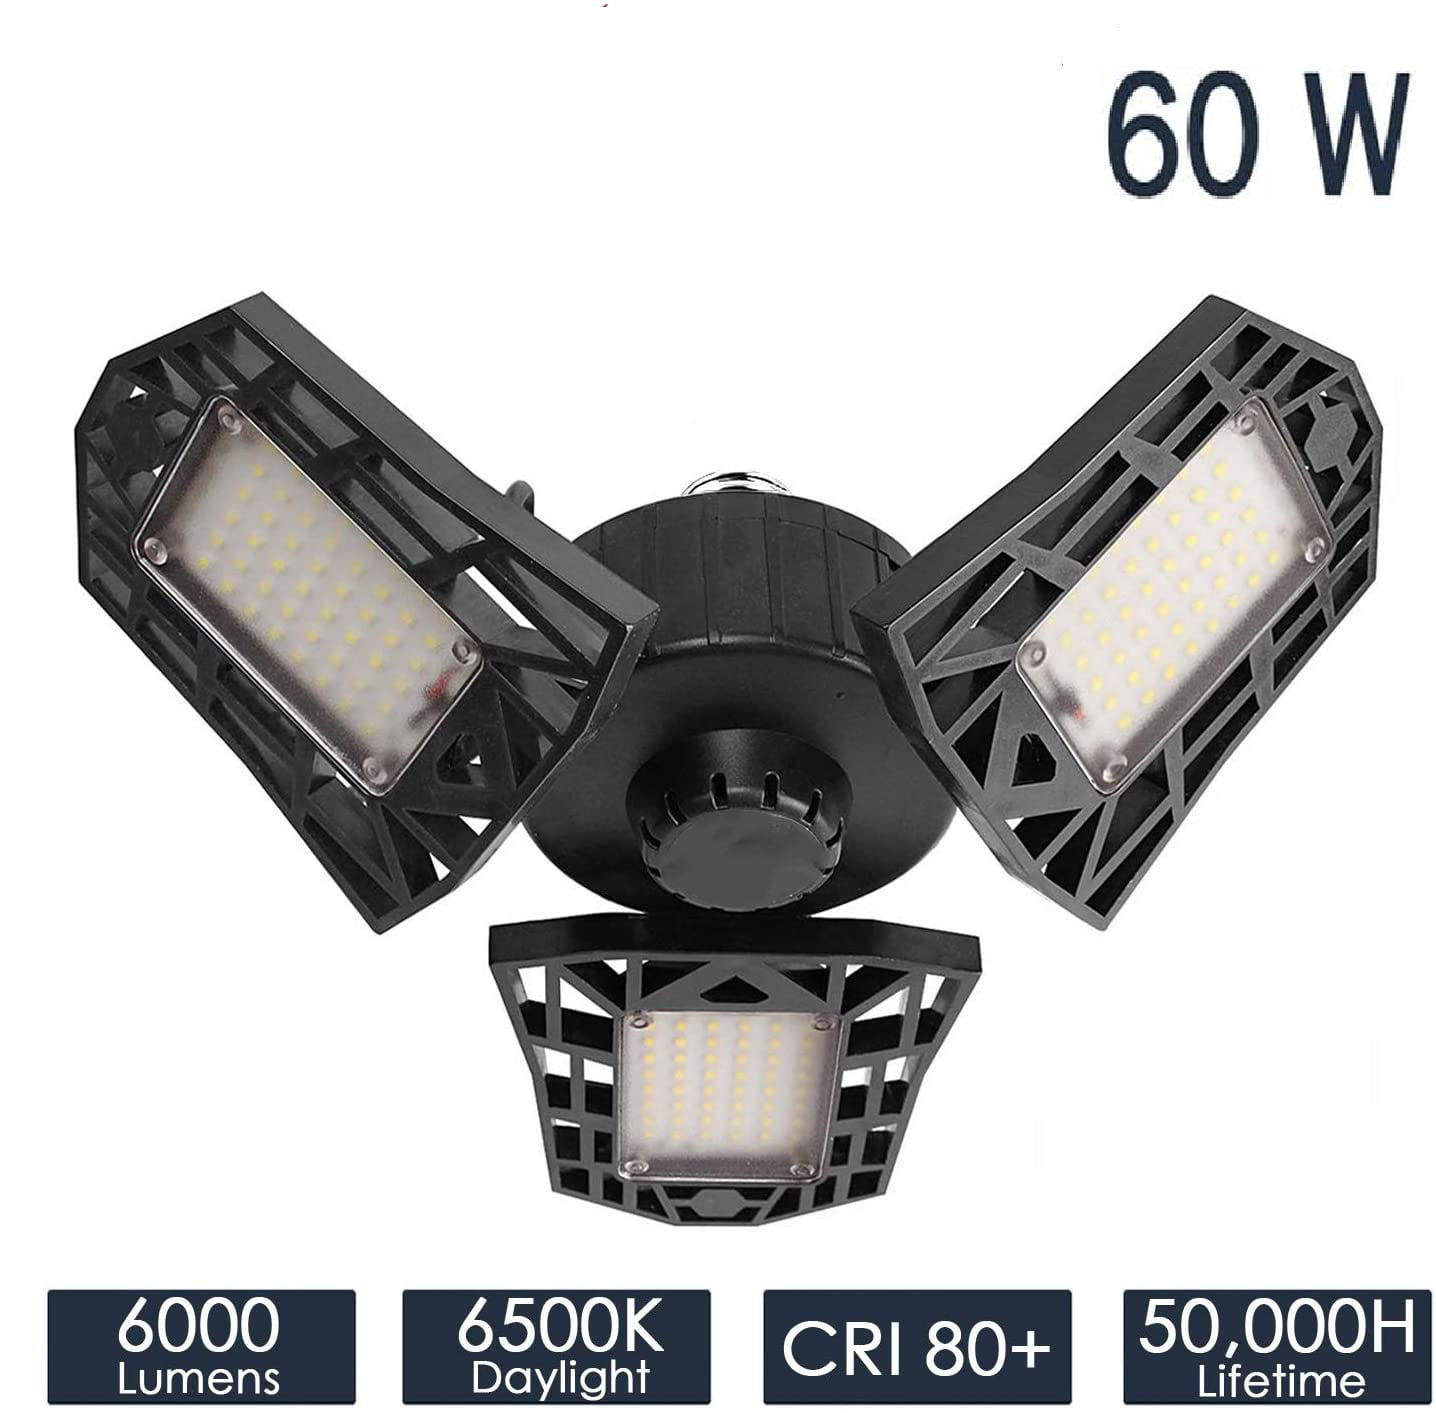 LED Garage Lighting 6000 Lumens Security Ceiling Light E27 Deformable Shop Lamp with 3 Adjustable Panels 6000K Daylight 